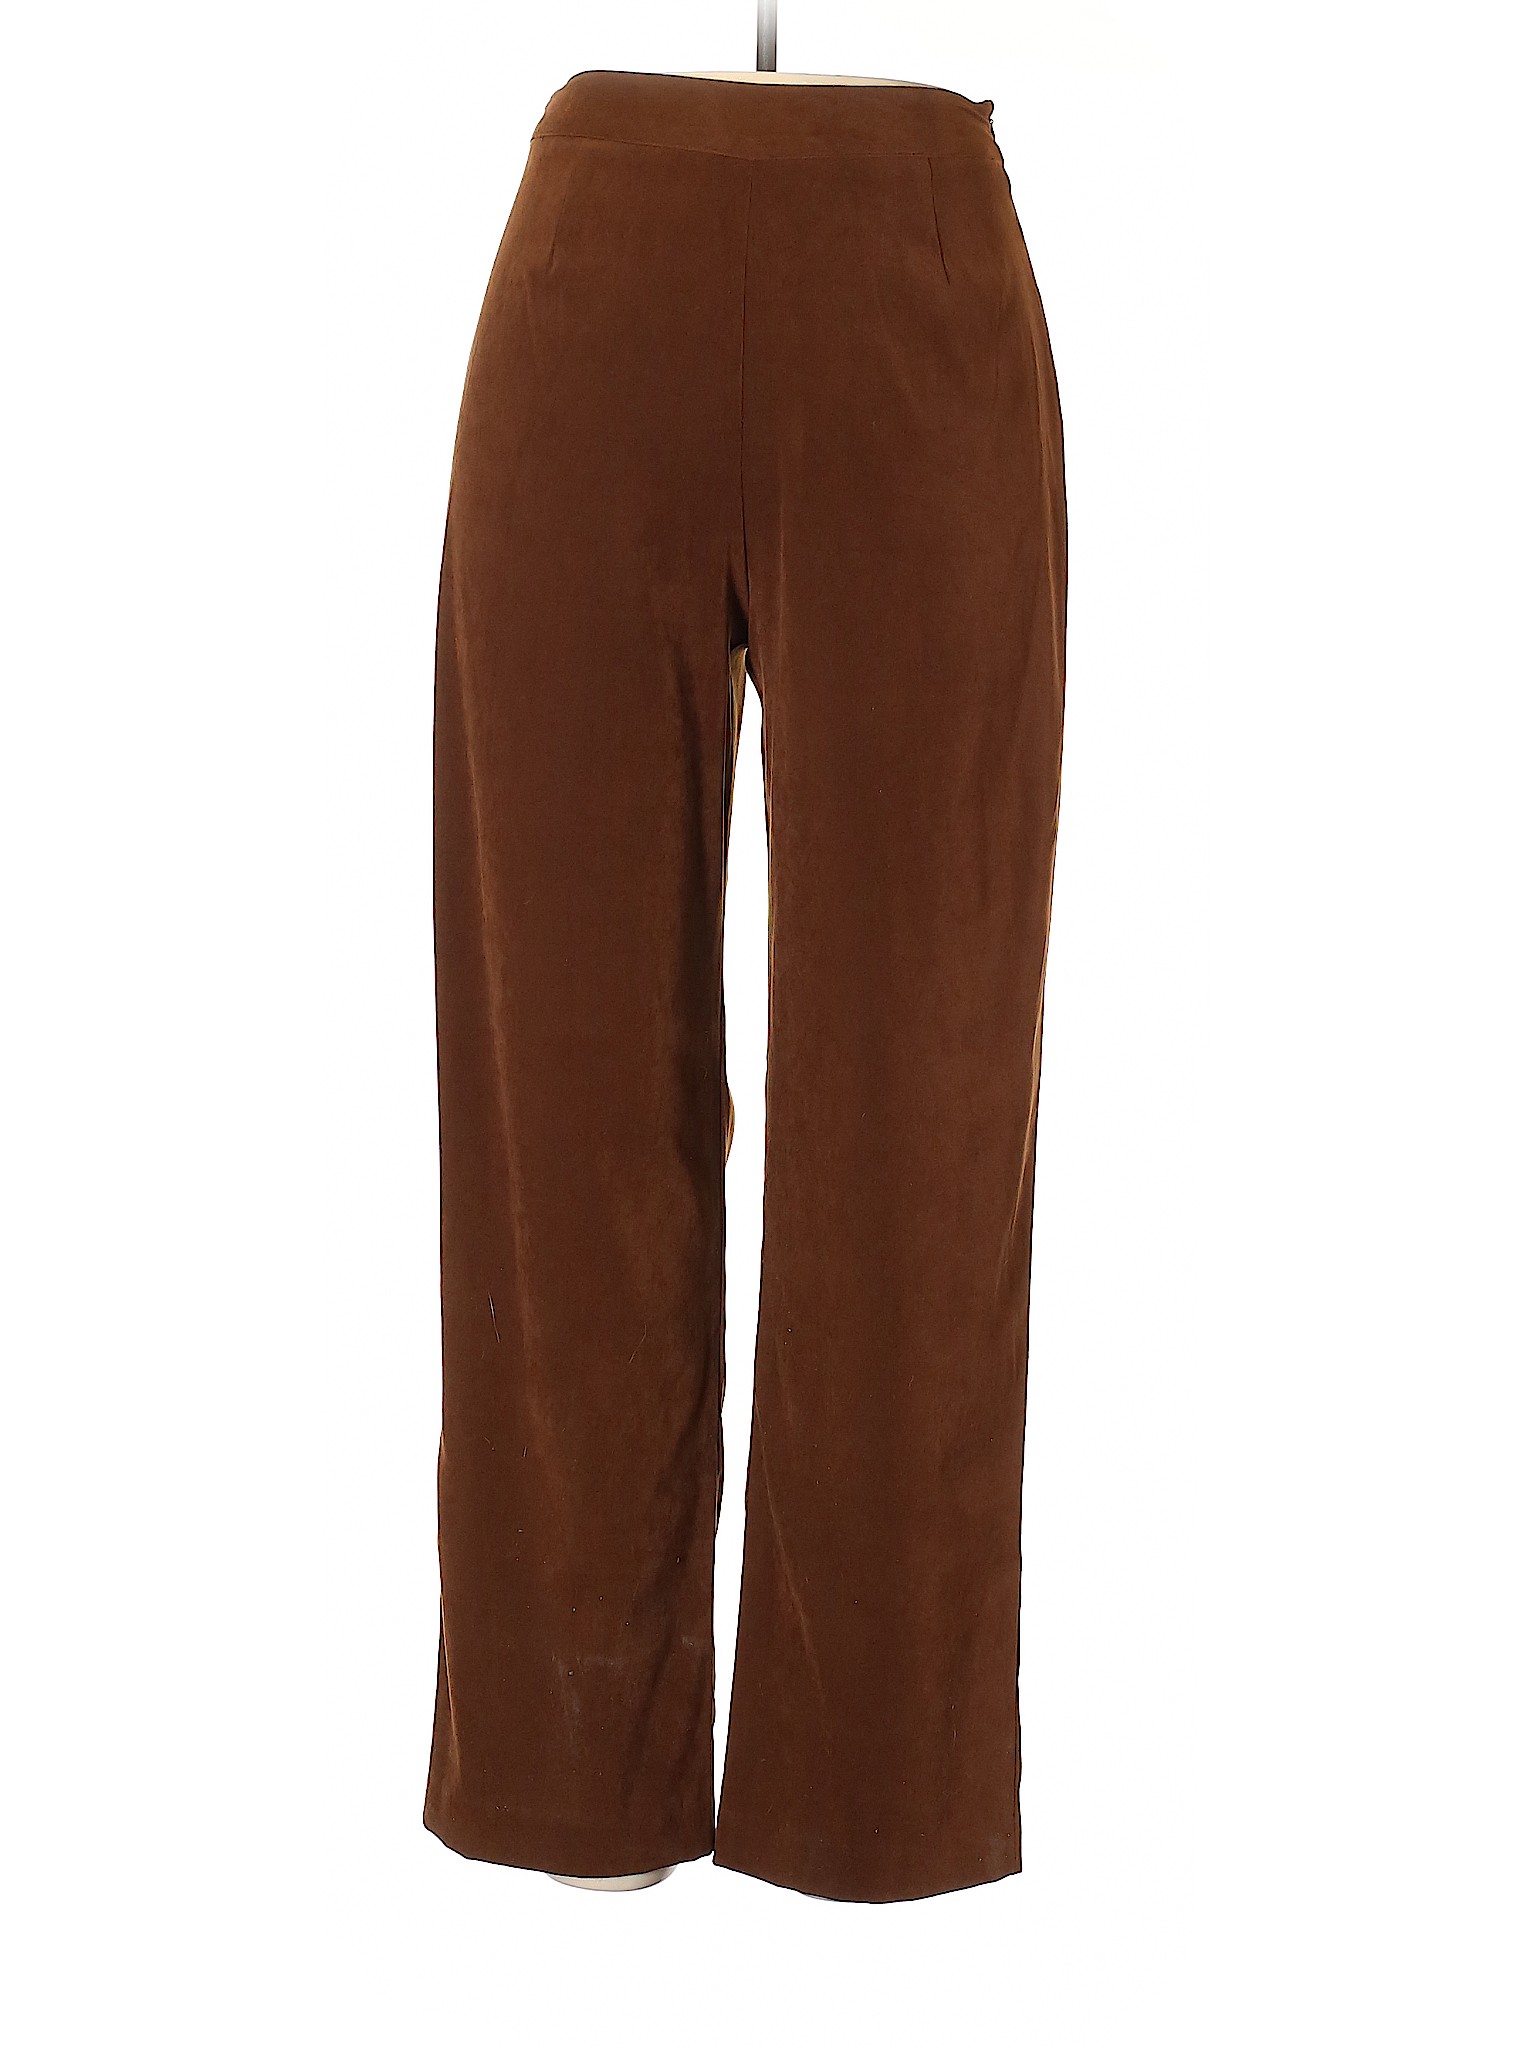 Orvis Women Brown Casual Pants 10 | eBay